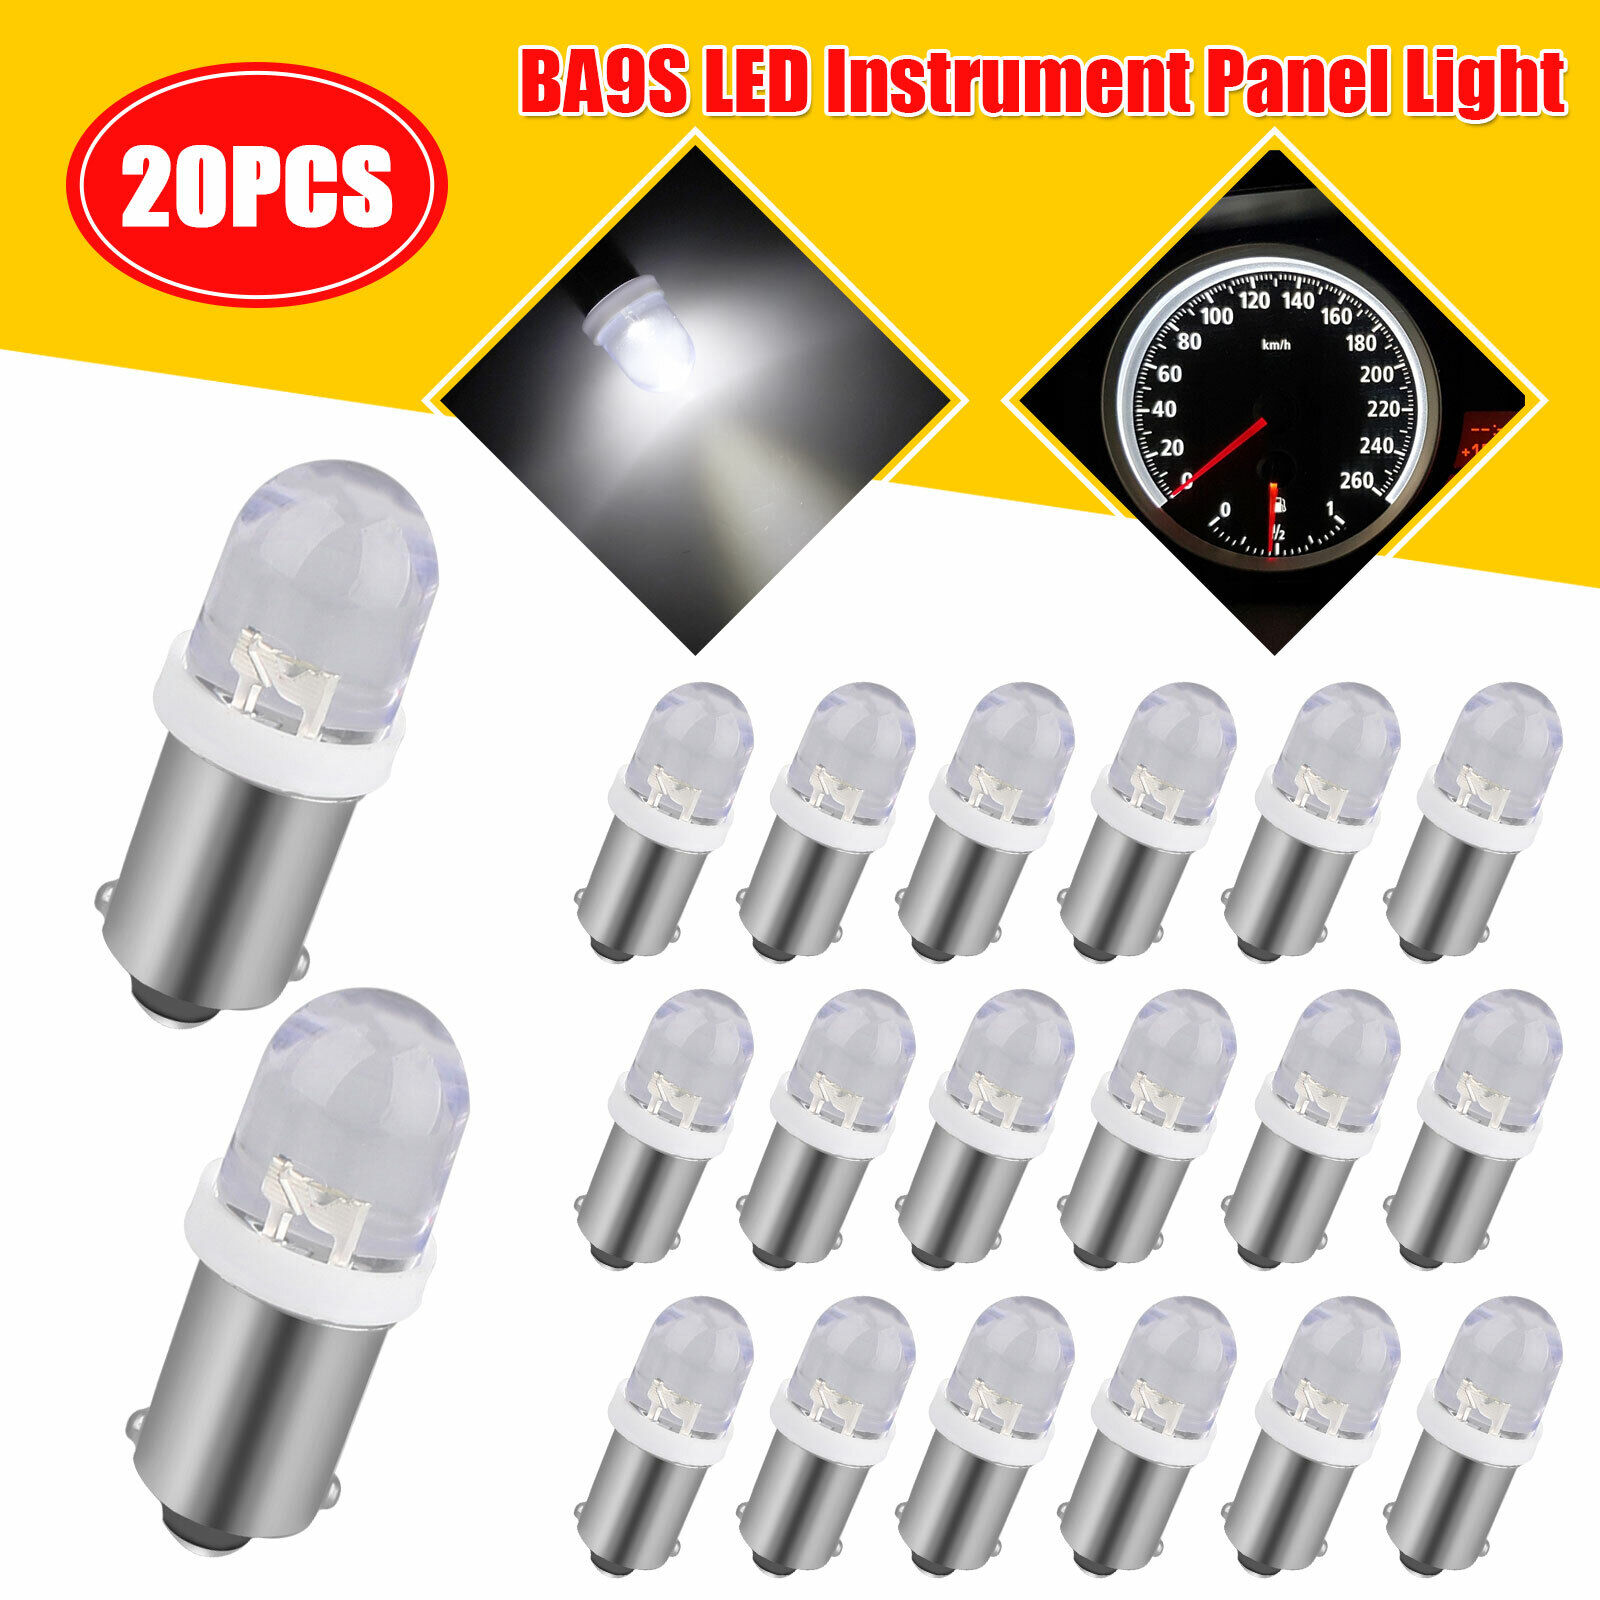 20PCS BA9S LED Interior Dome Instrument Panel Dash Gauge Light Bulbs 6000K White